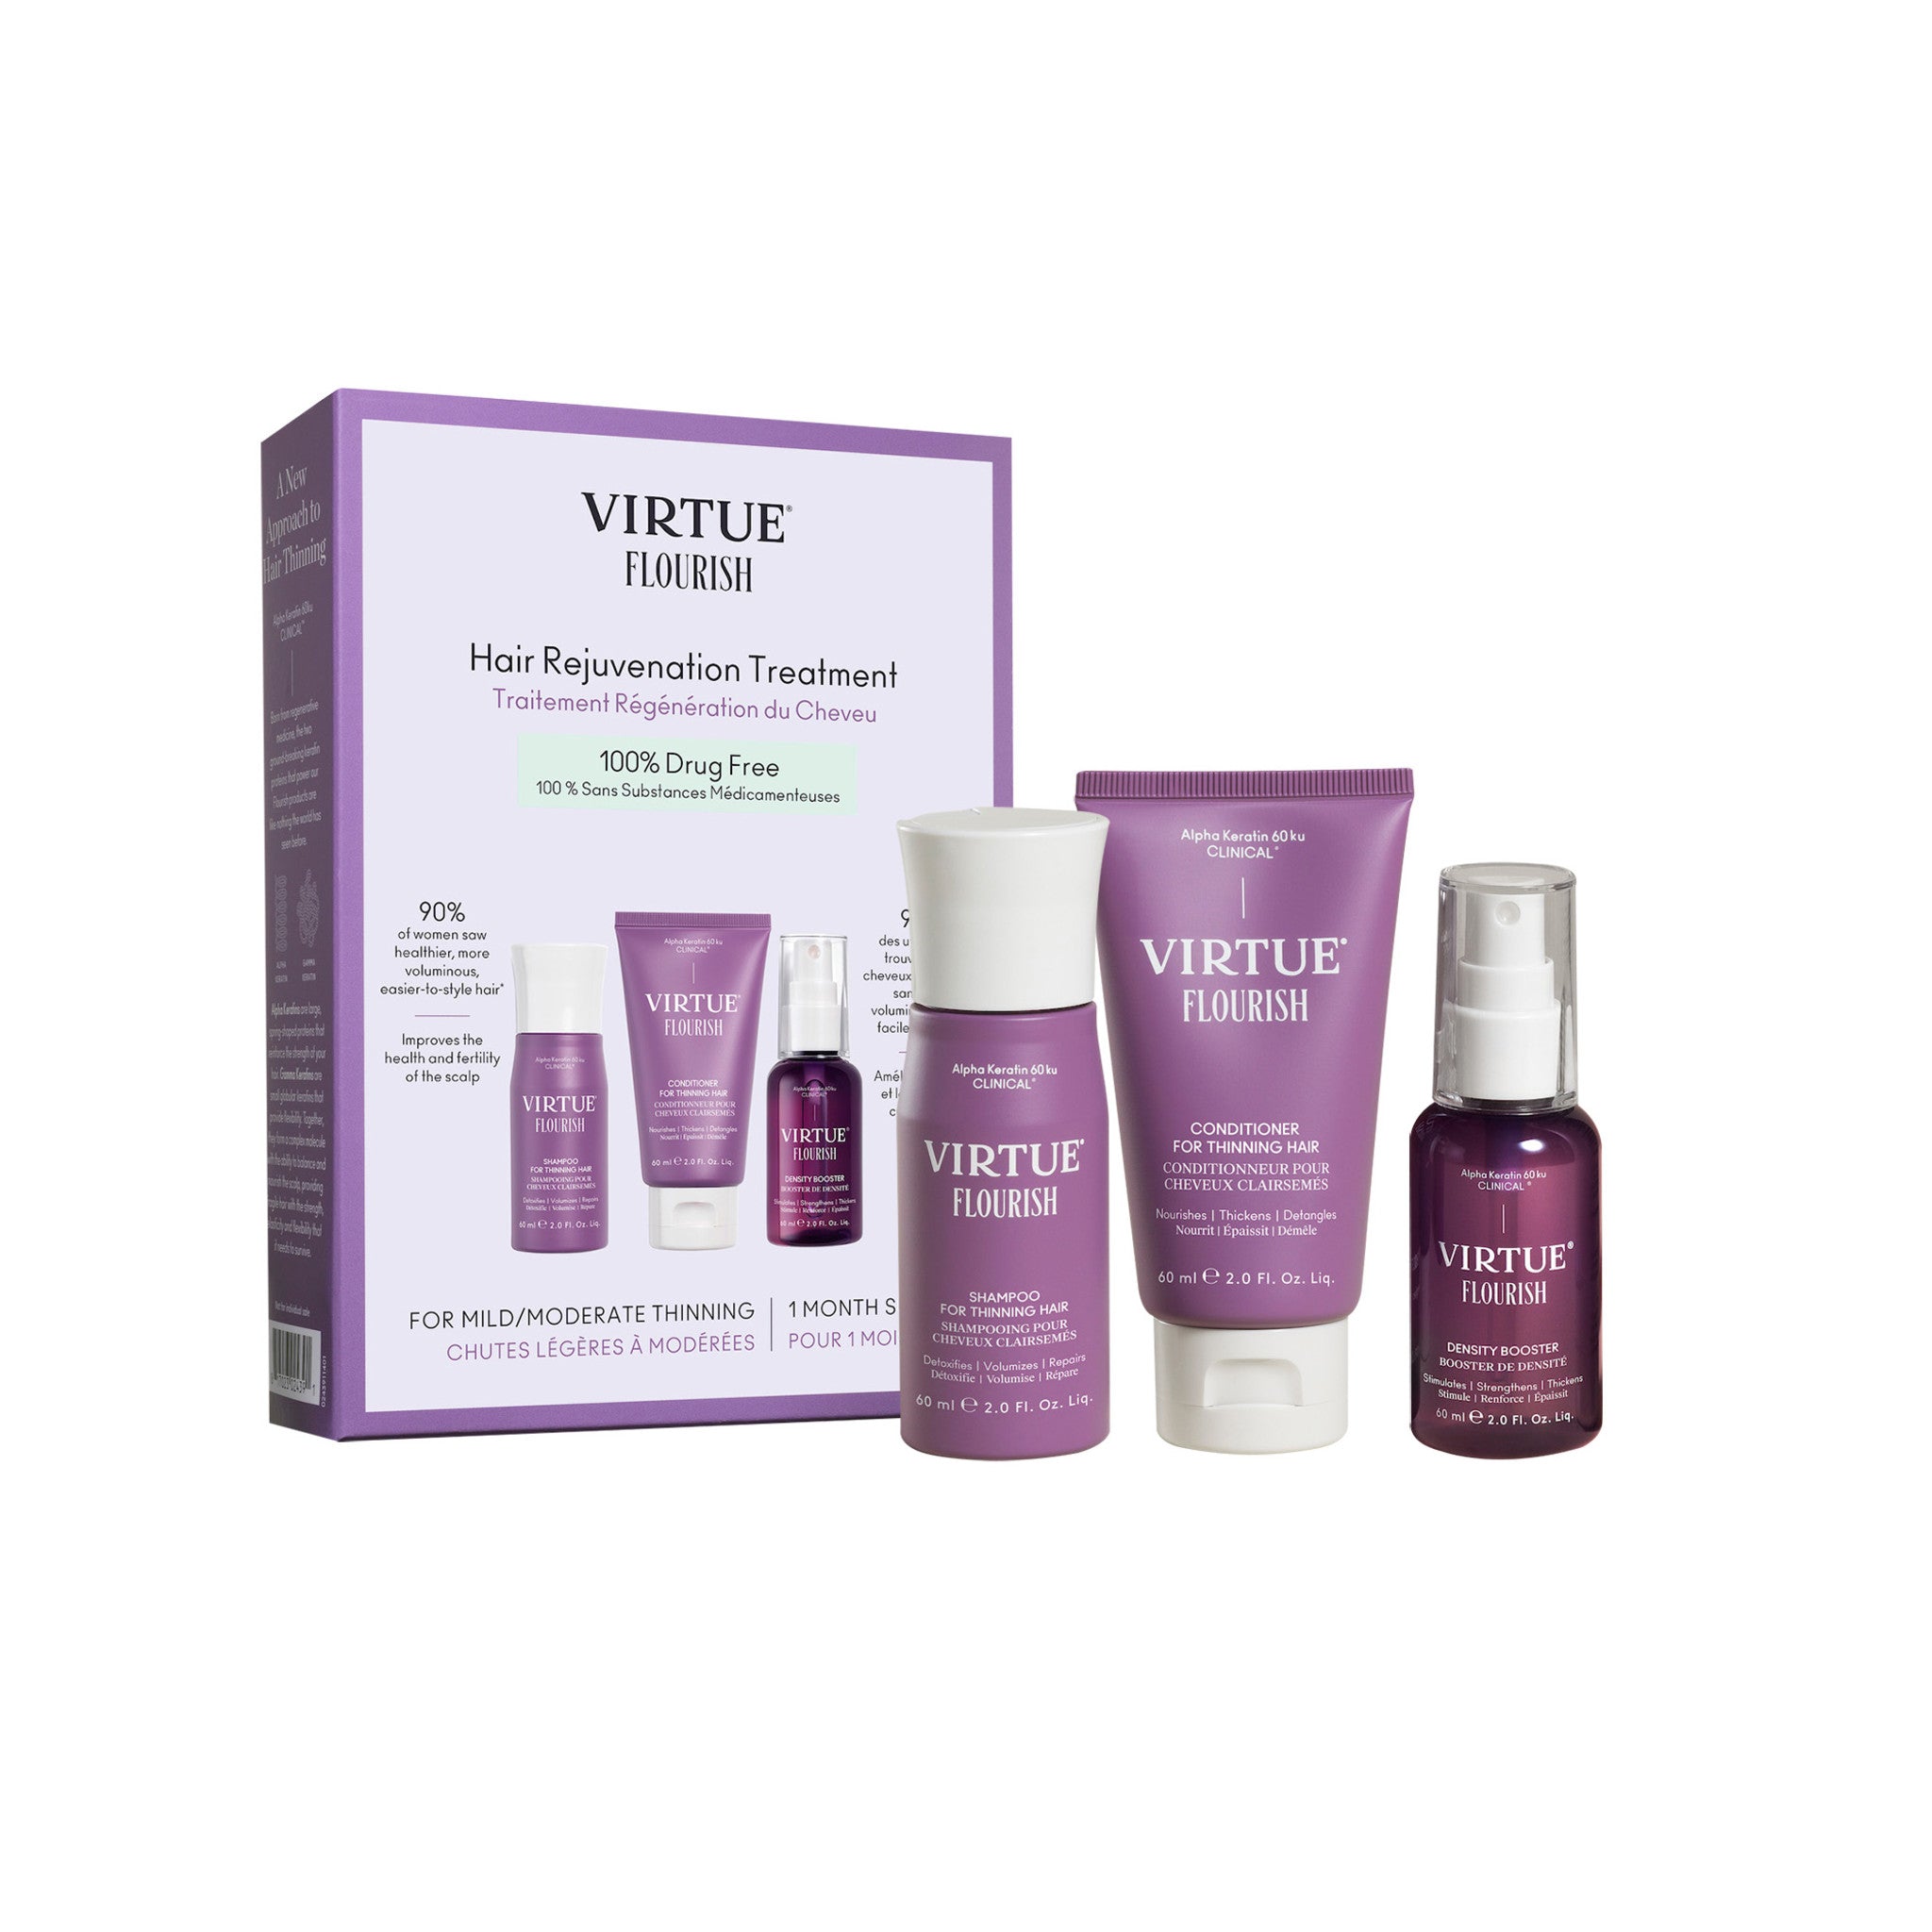 Virtue Flourish Nightly Intensive Hair Rejuvenation Treatment 30 Day main image.